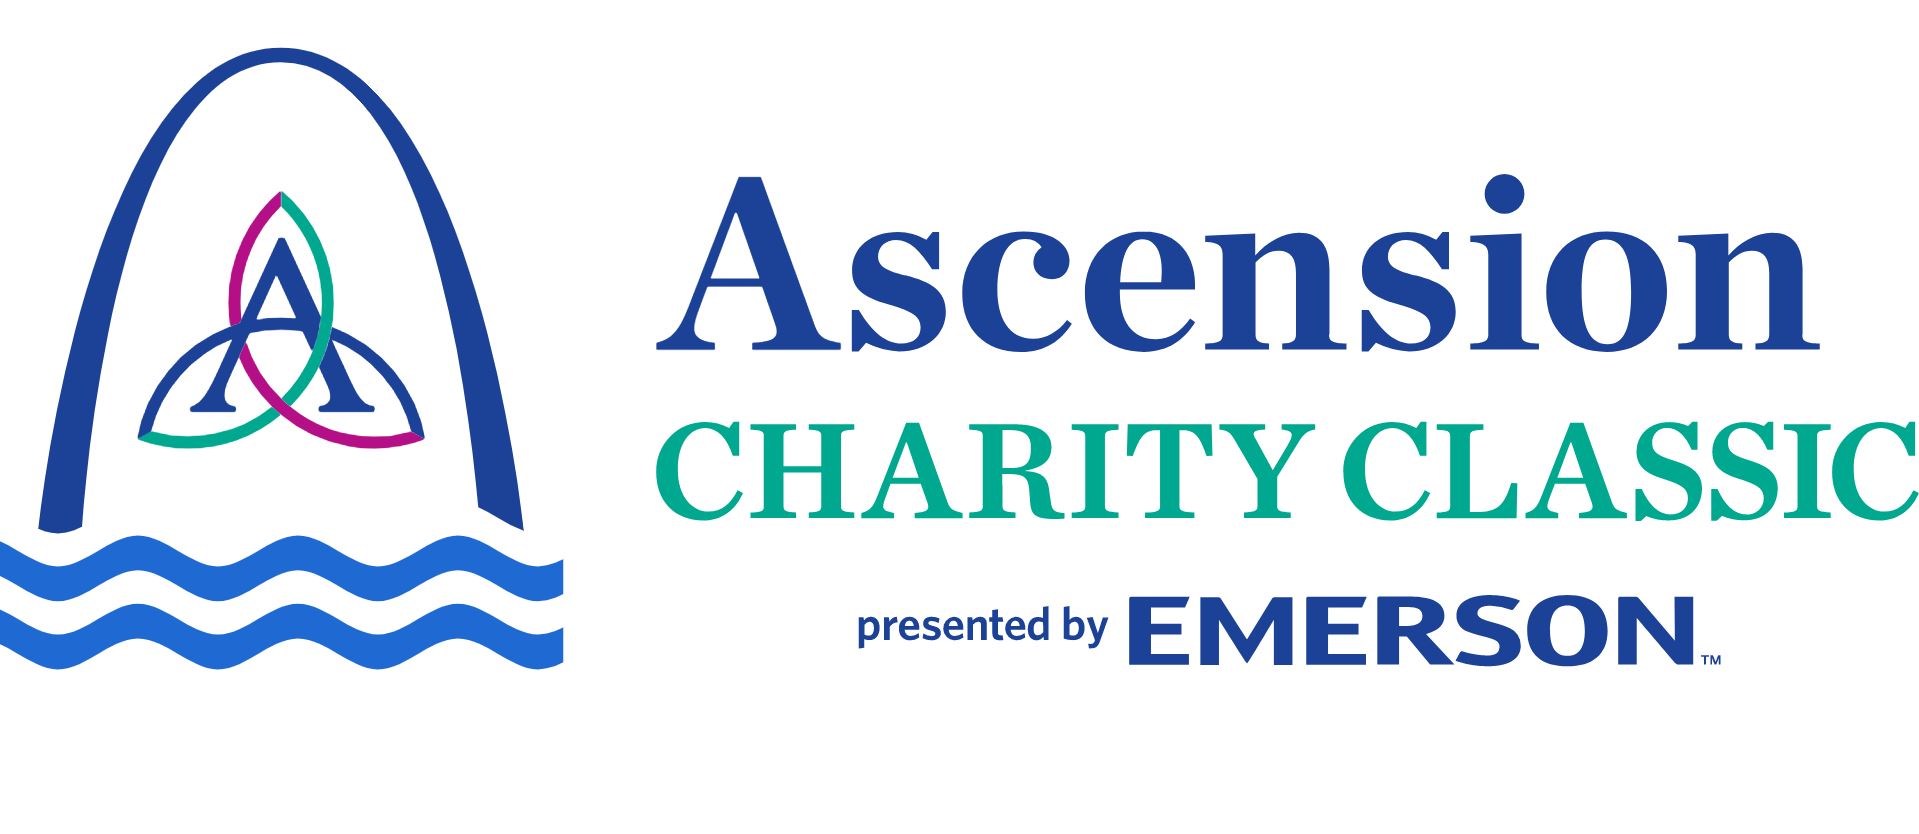 Ascension Charity Classic logo.JPG